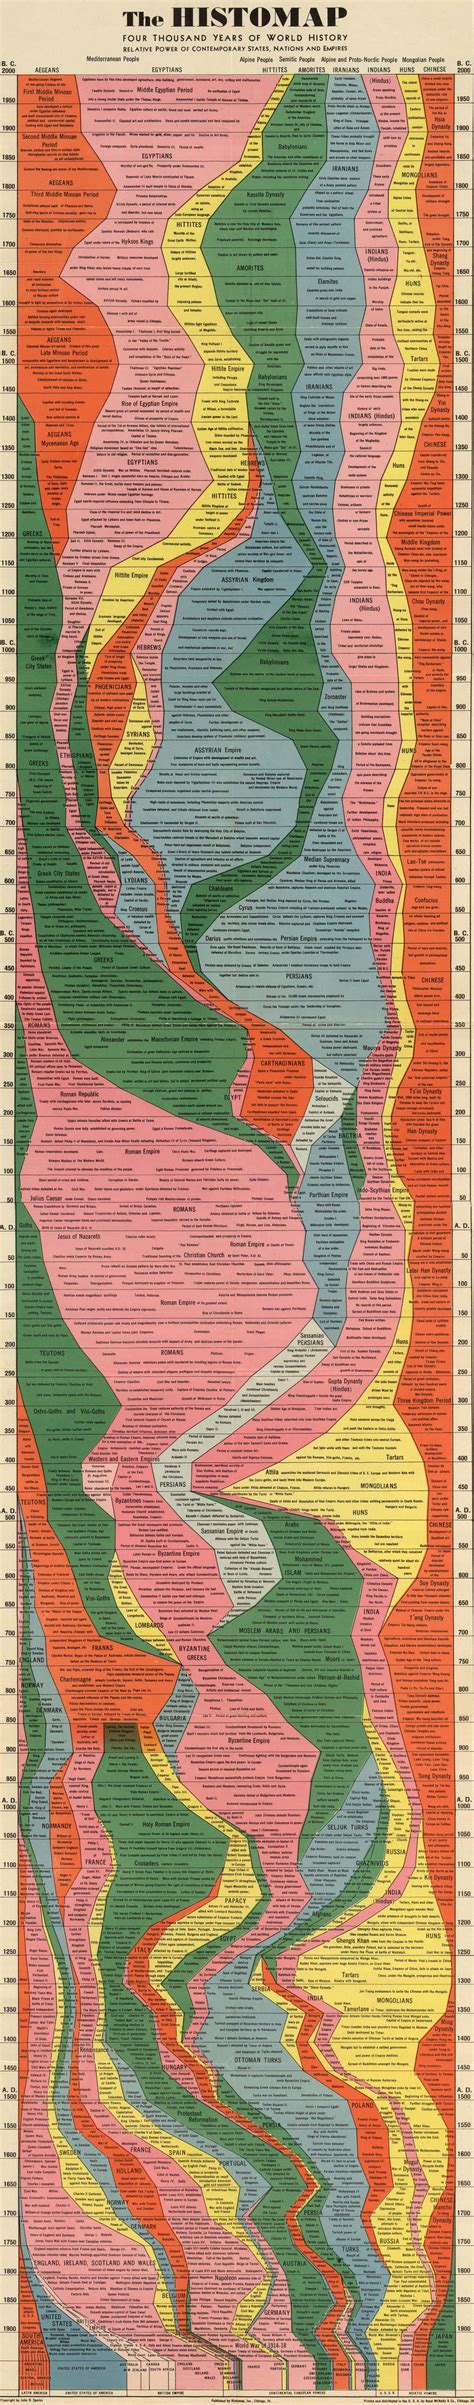 History Timeline Map